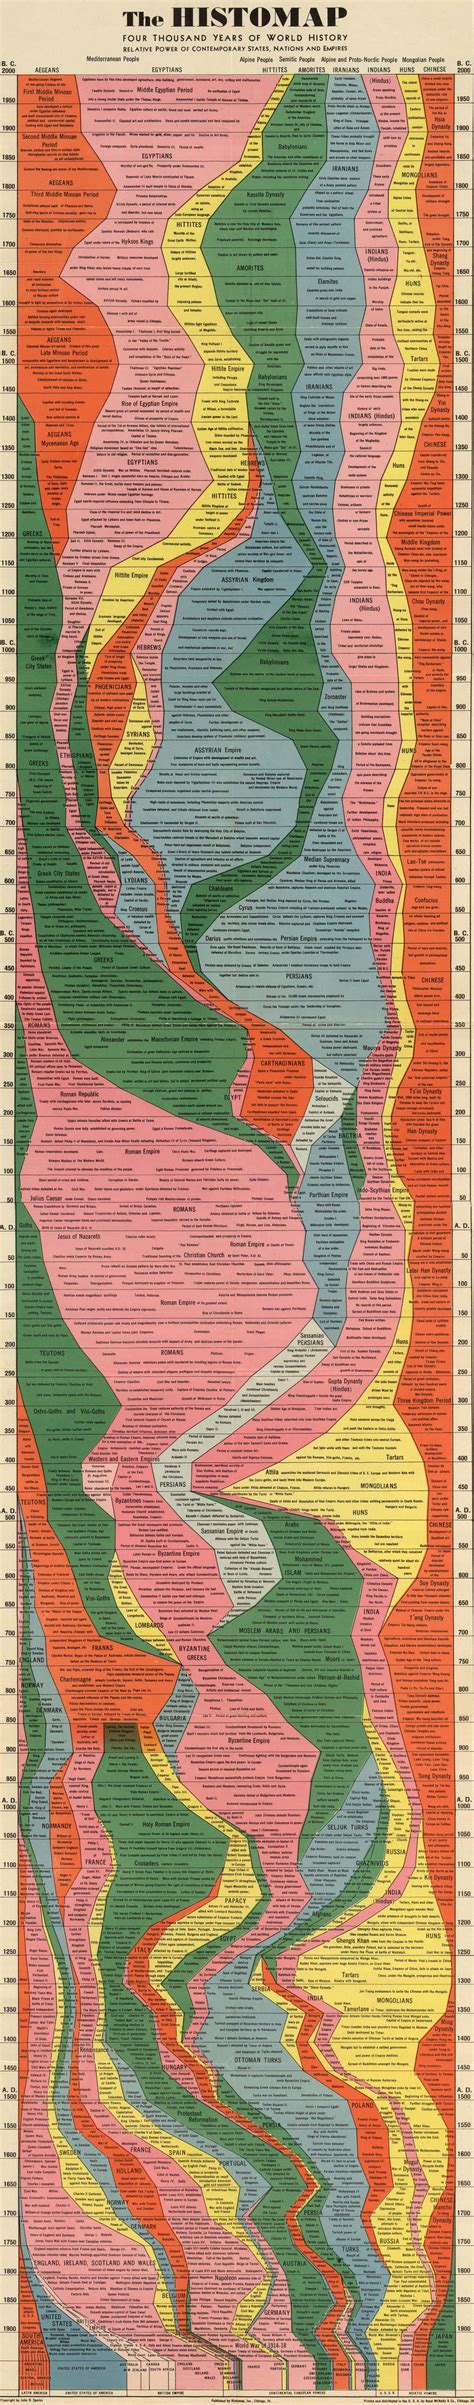 History Timeline Map